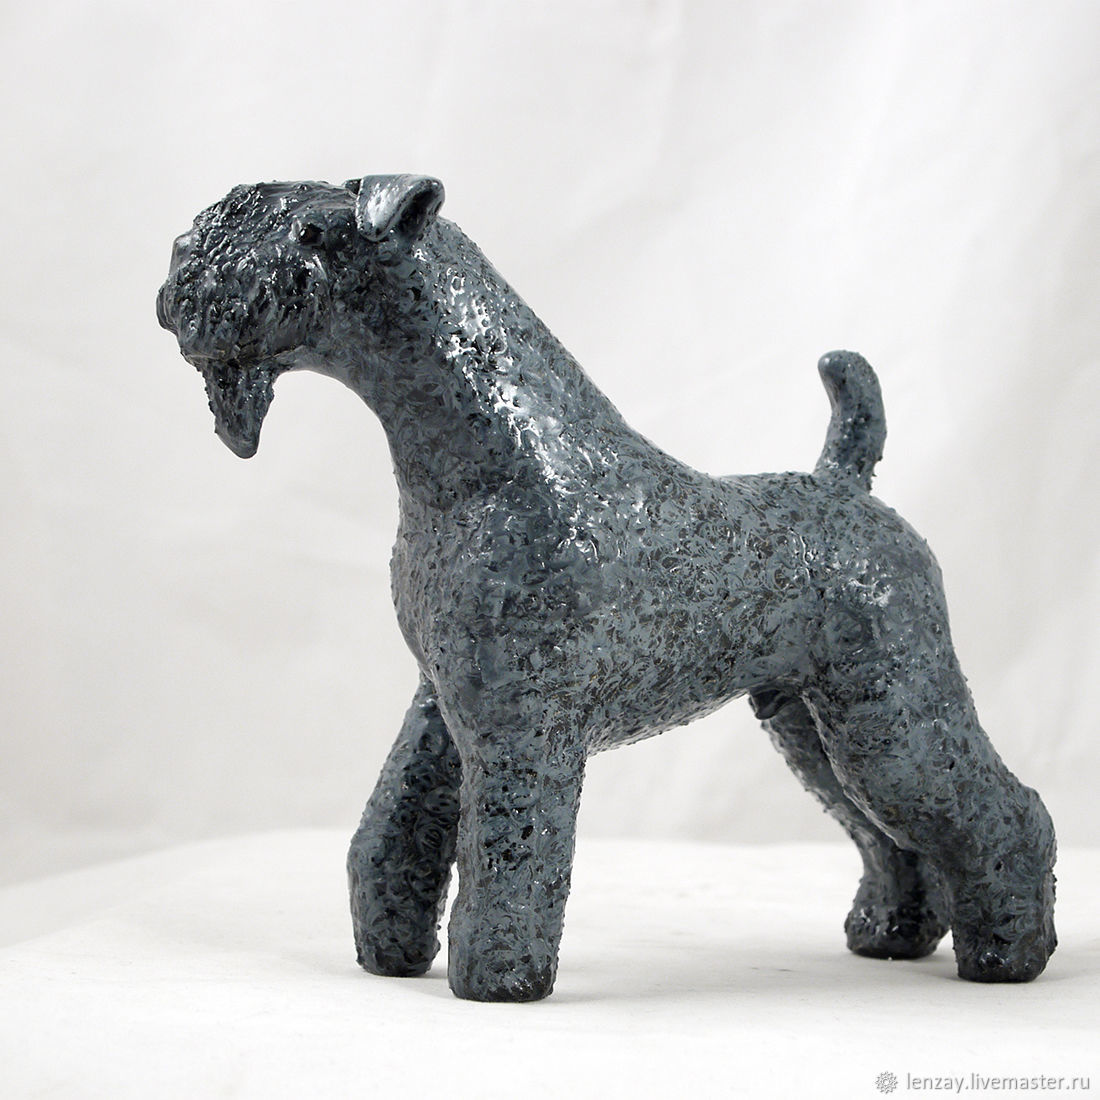 Kerry Blue Terrier Figurine